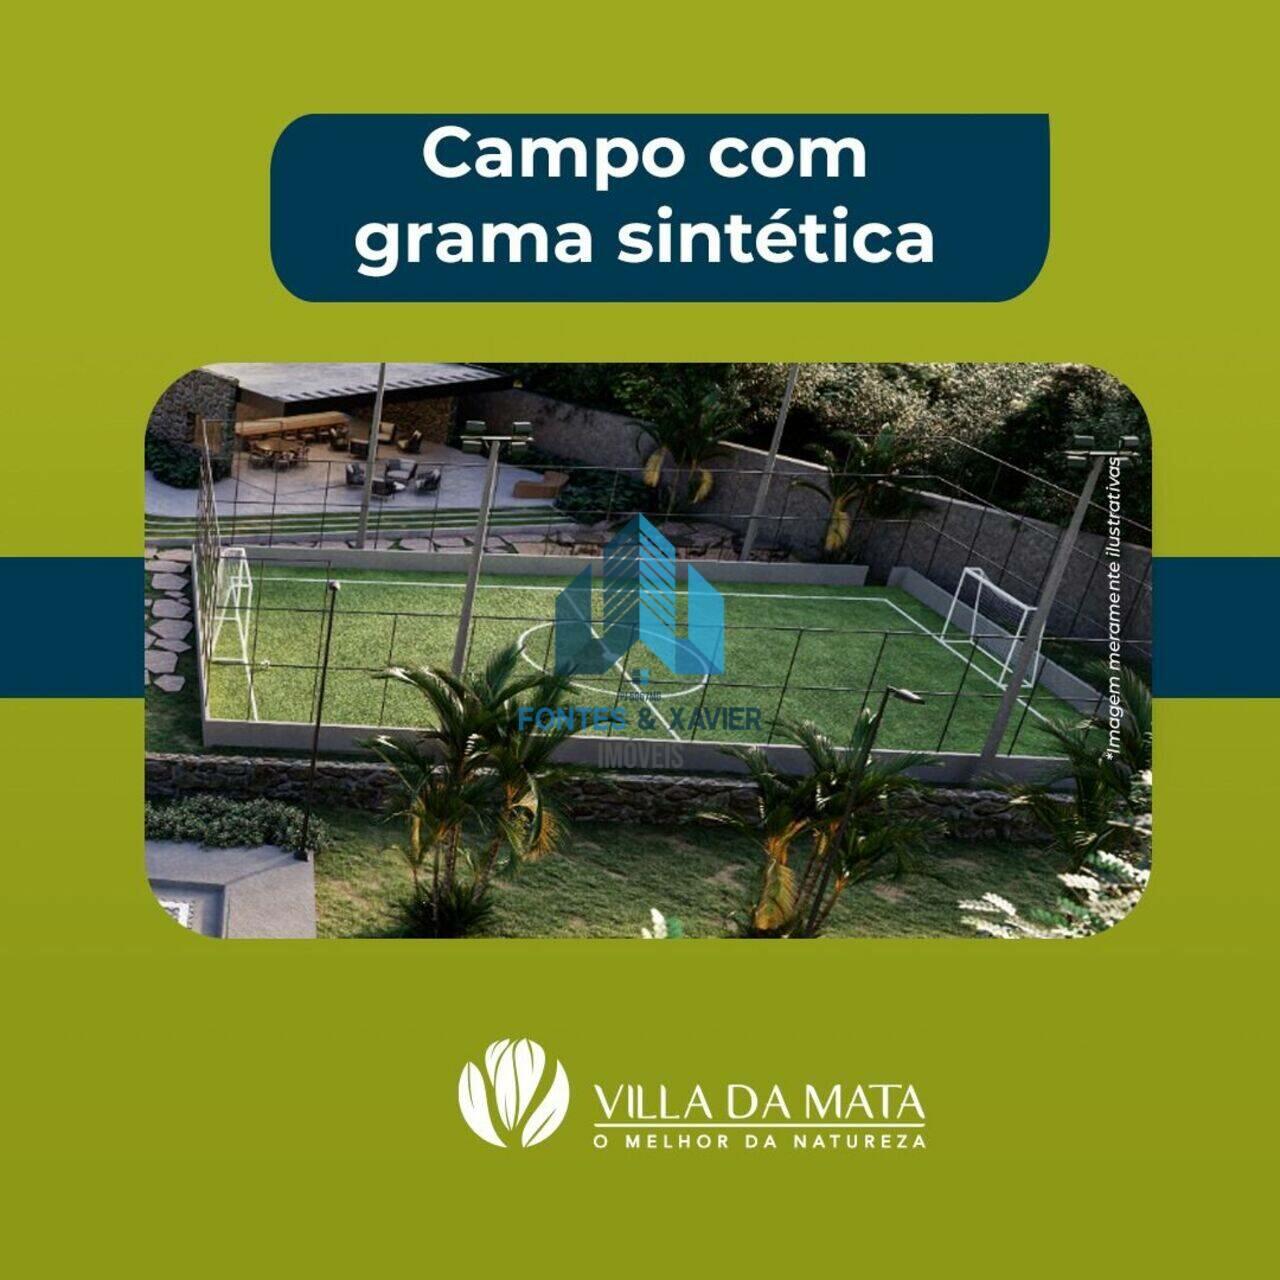 Terreno Morada da Garça, Matias Barbosa - MG